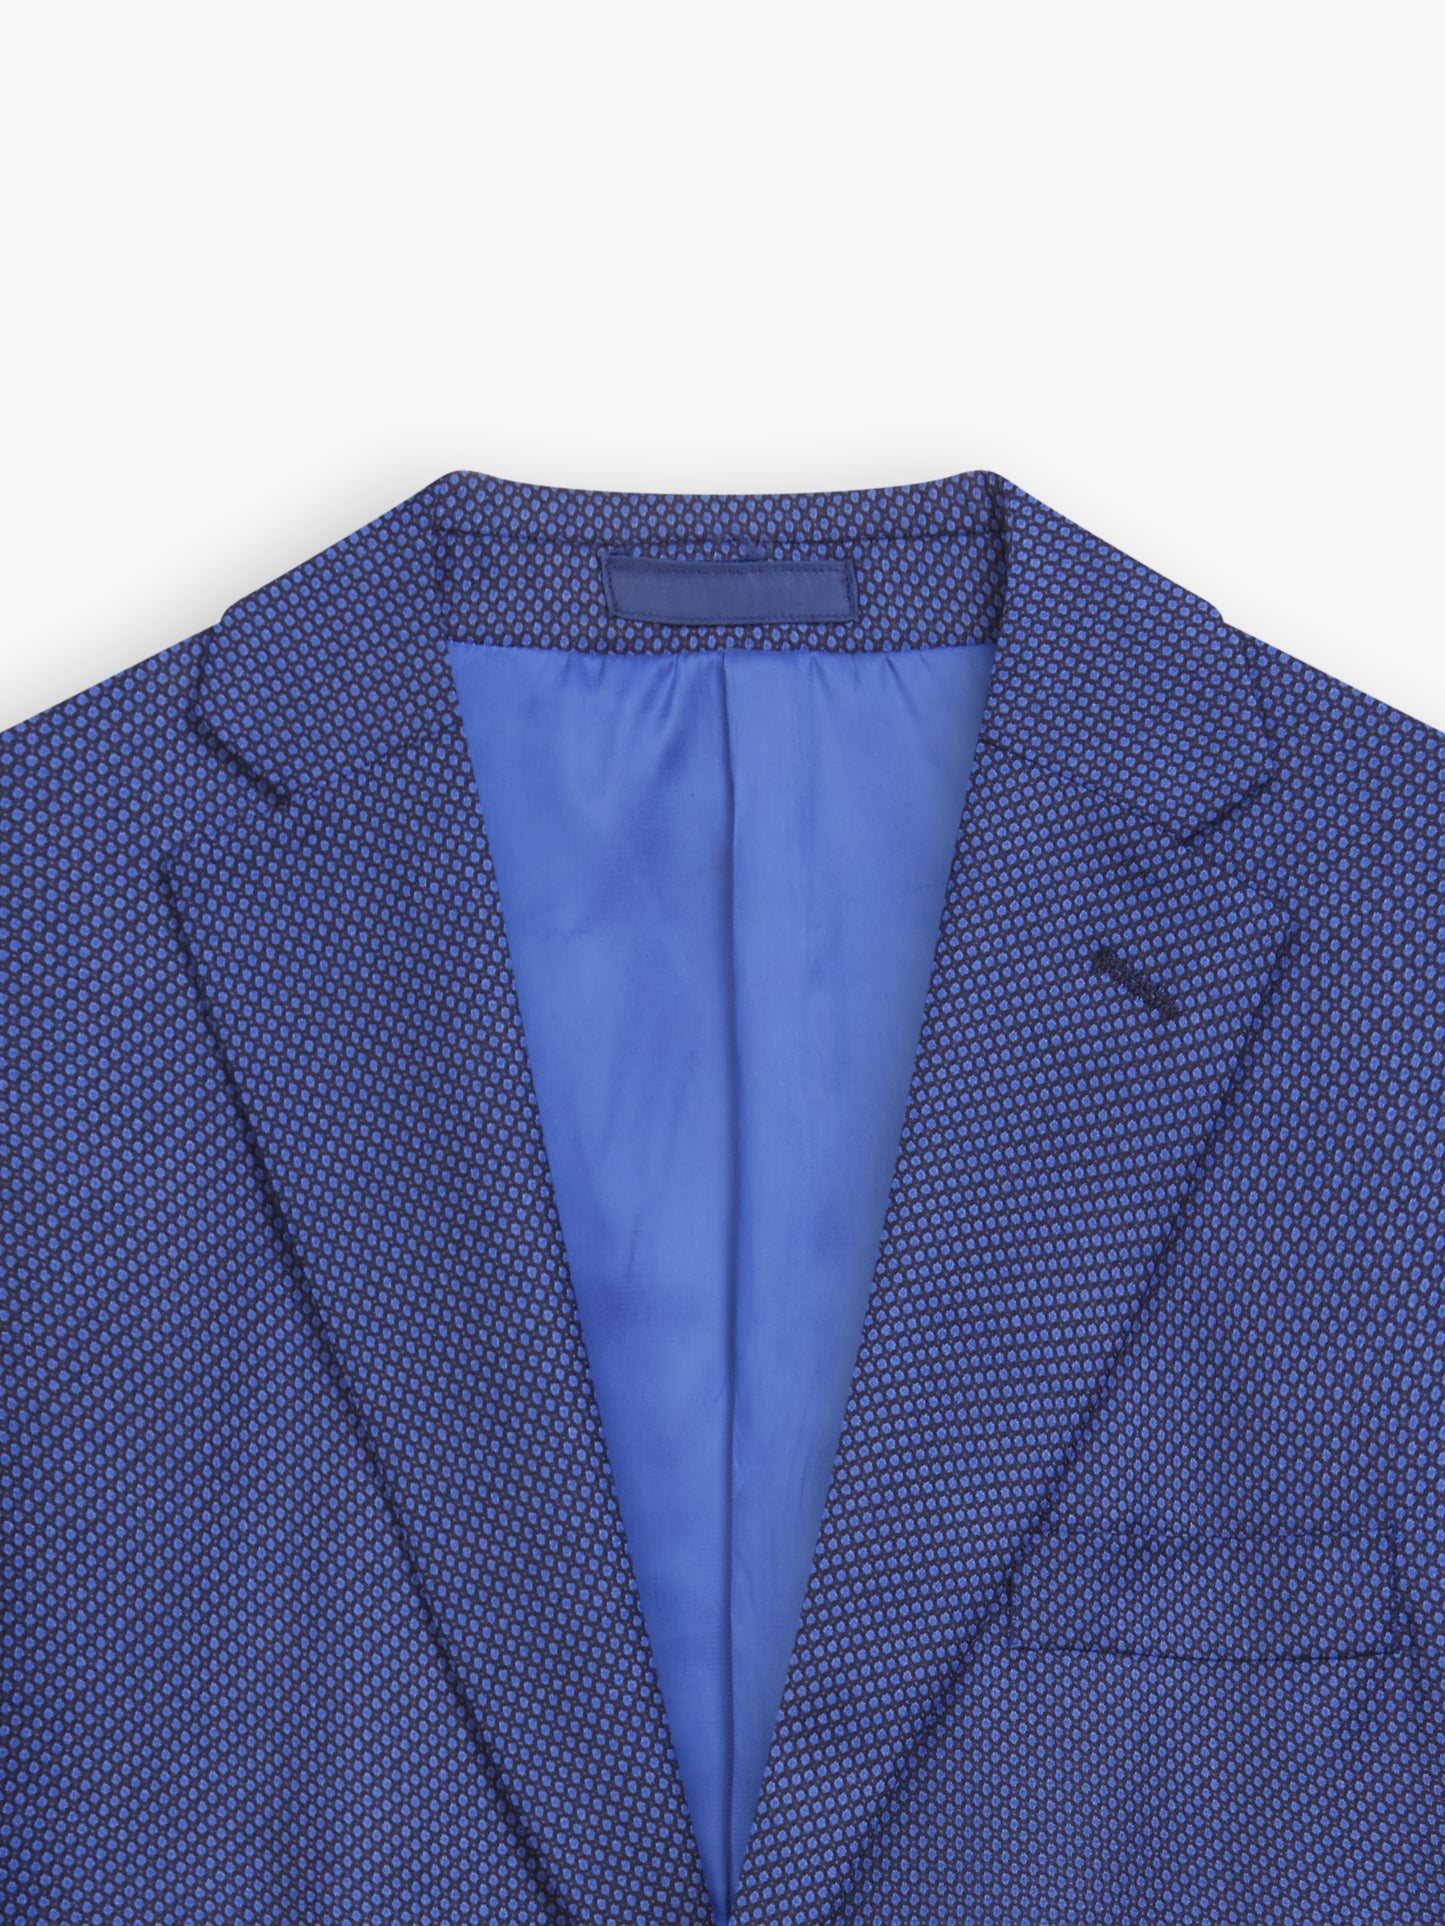 Fiorano Blue Birdseye Jacket